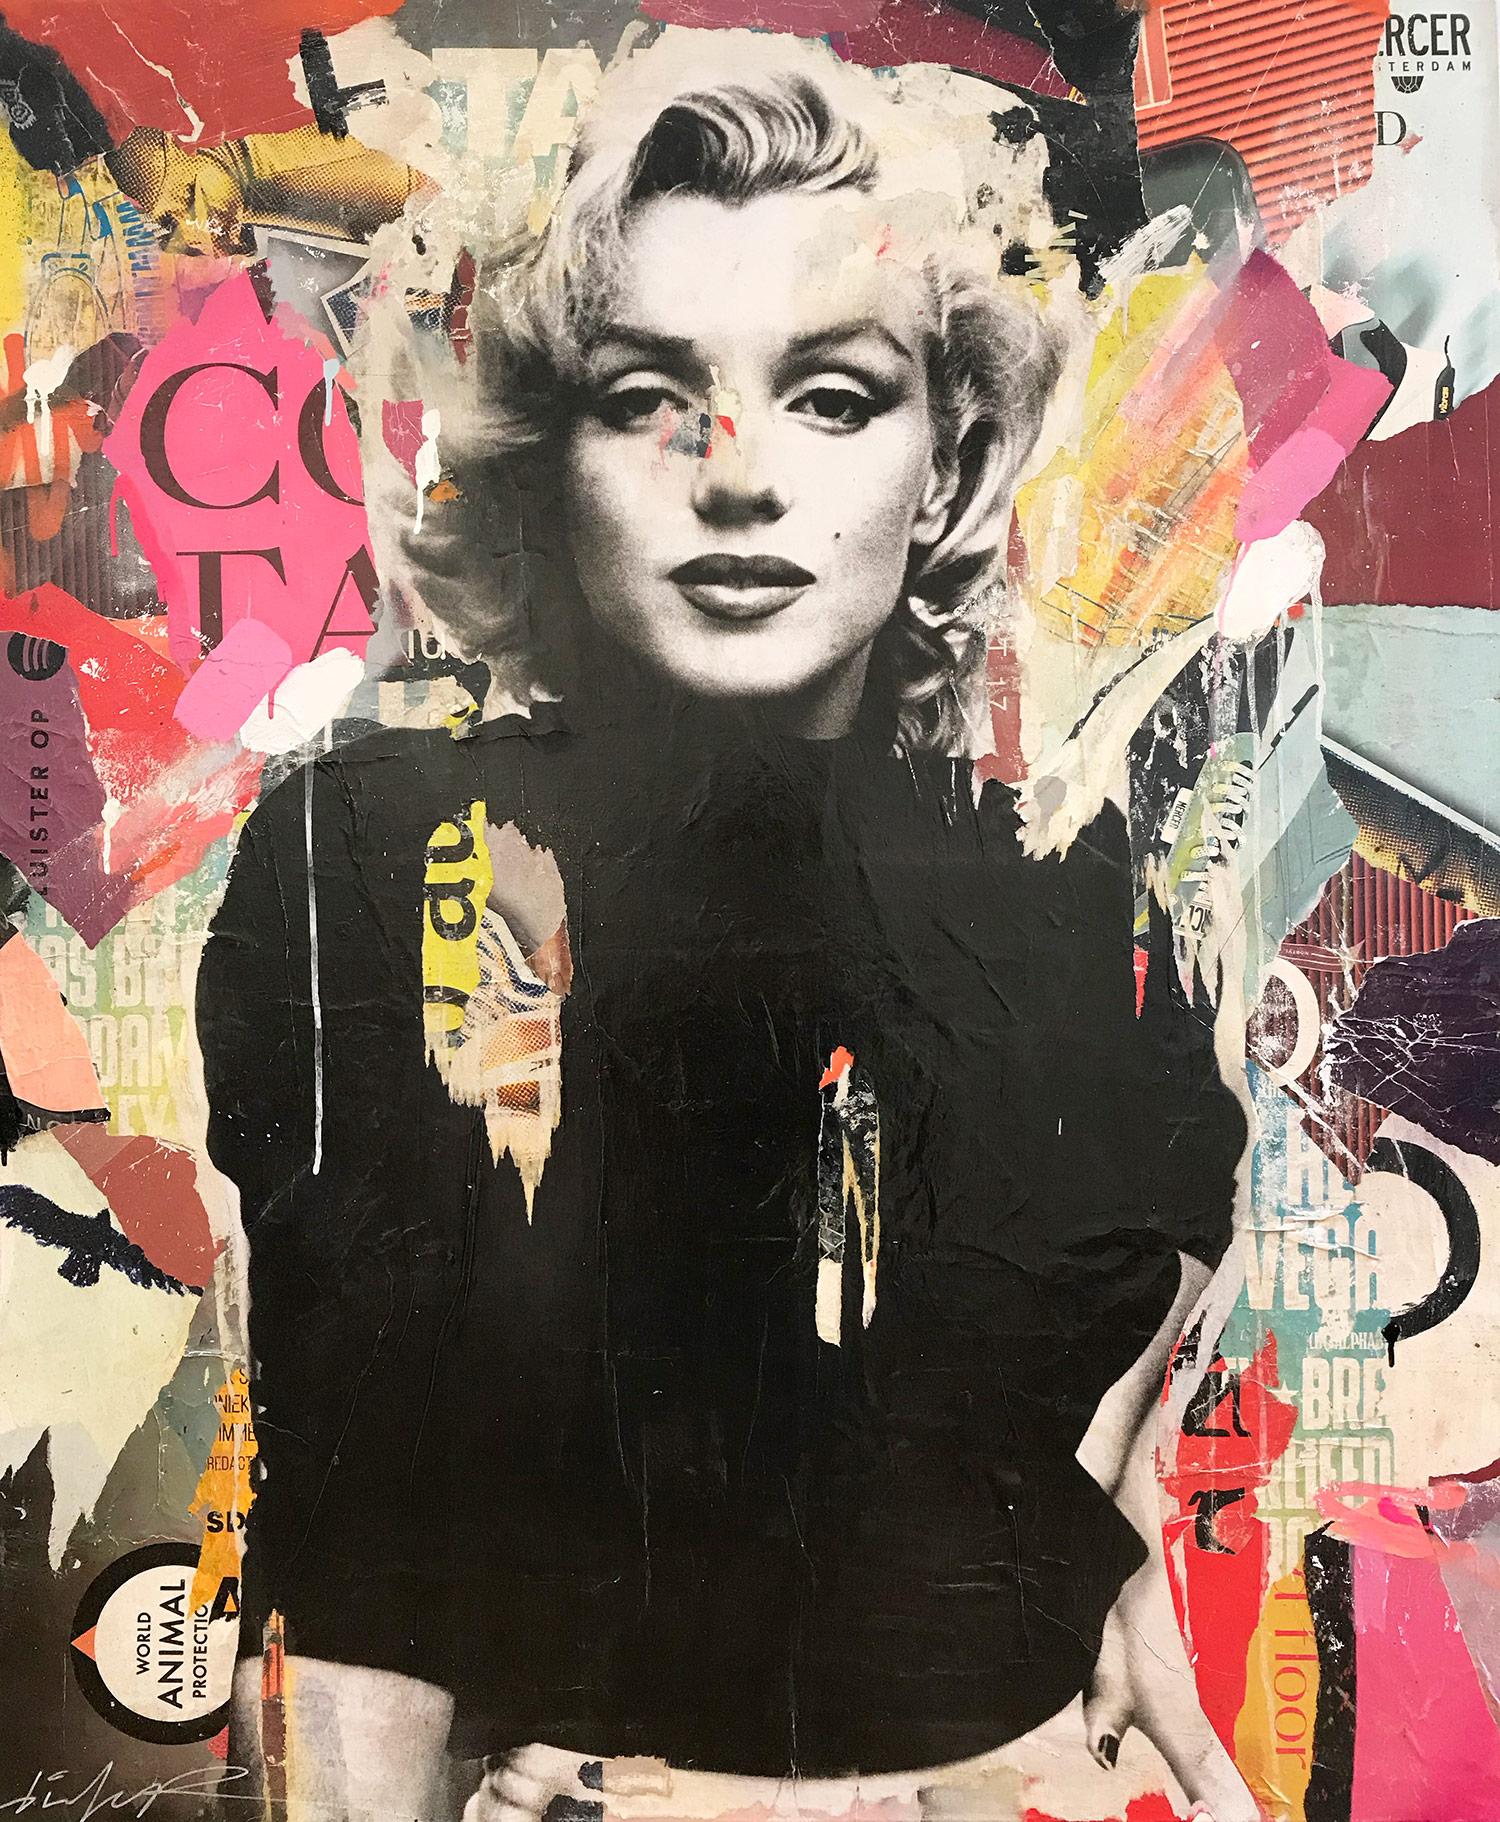 Gieler Abstract Painting - "Defy Gravity" Marilyn Monroe Portrait Pop Art Street Art Painting 